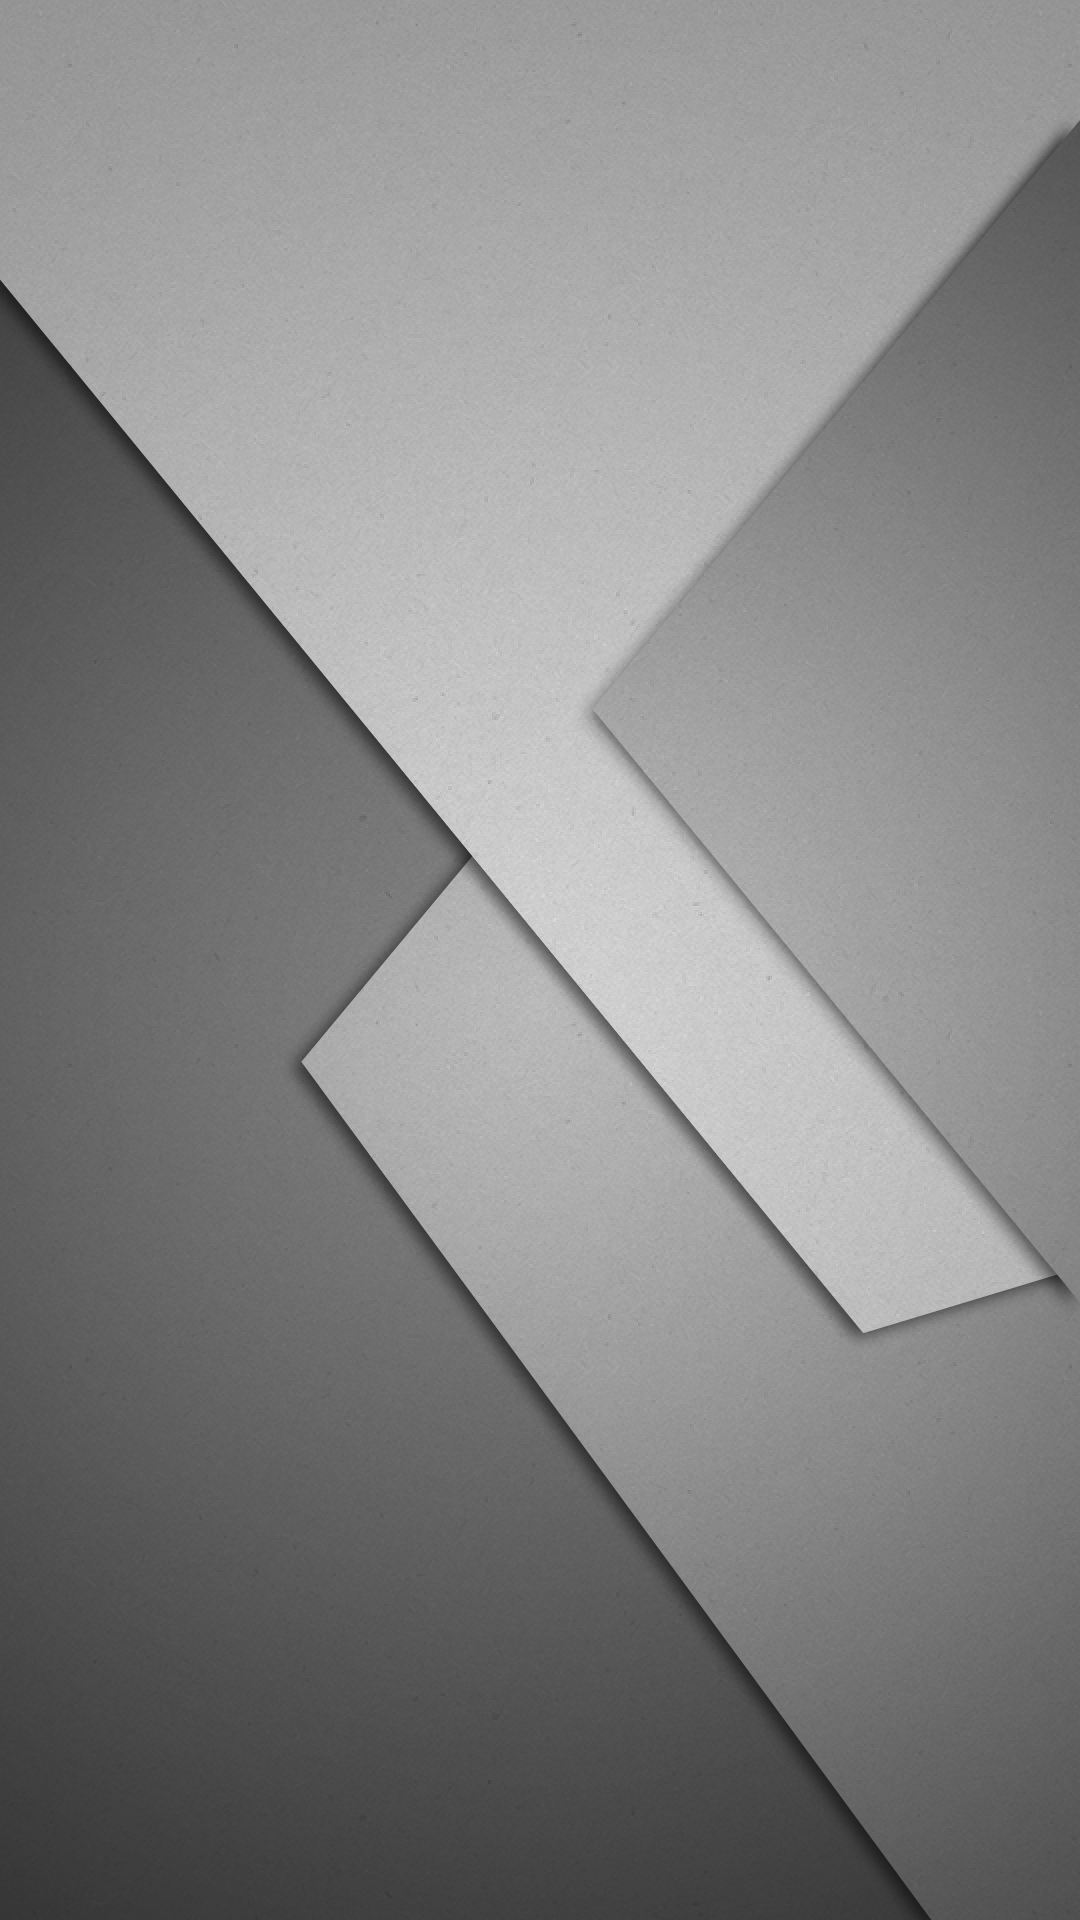 Android Marshmallow Wallpaper Xda